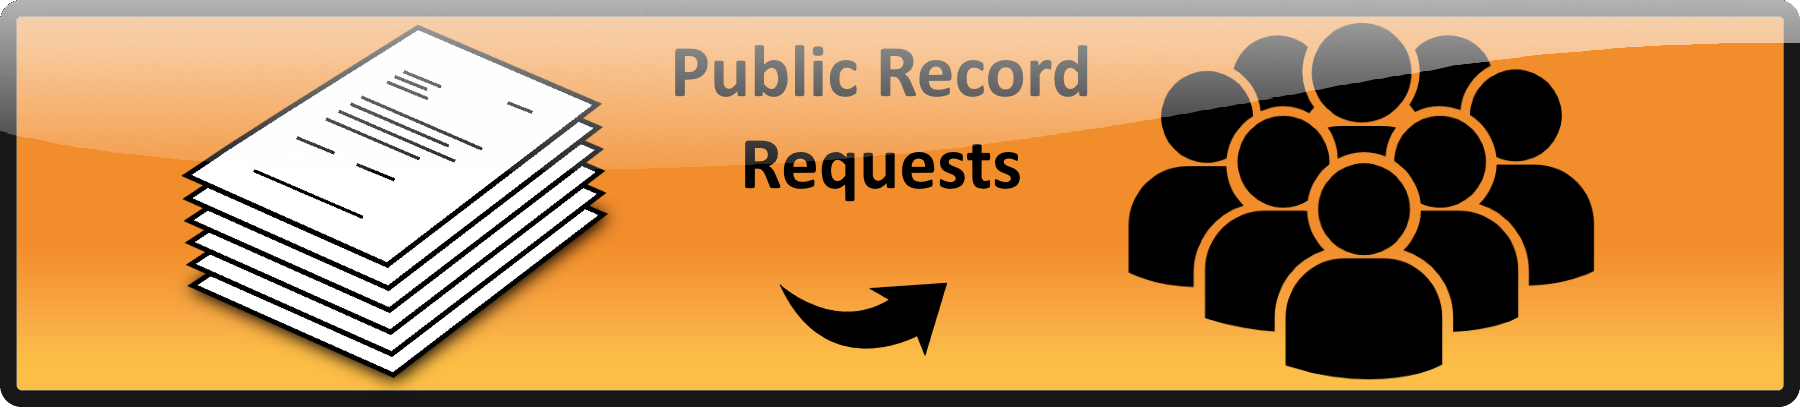 Public Record Requests